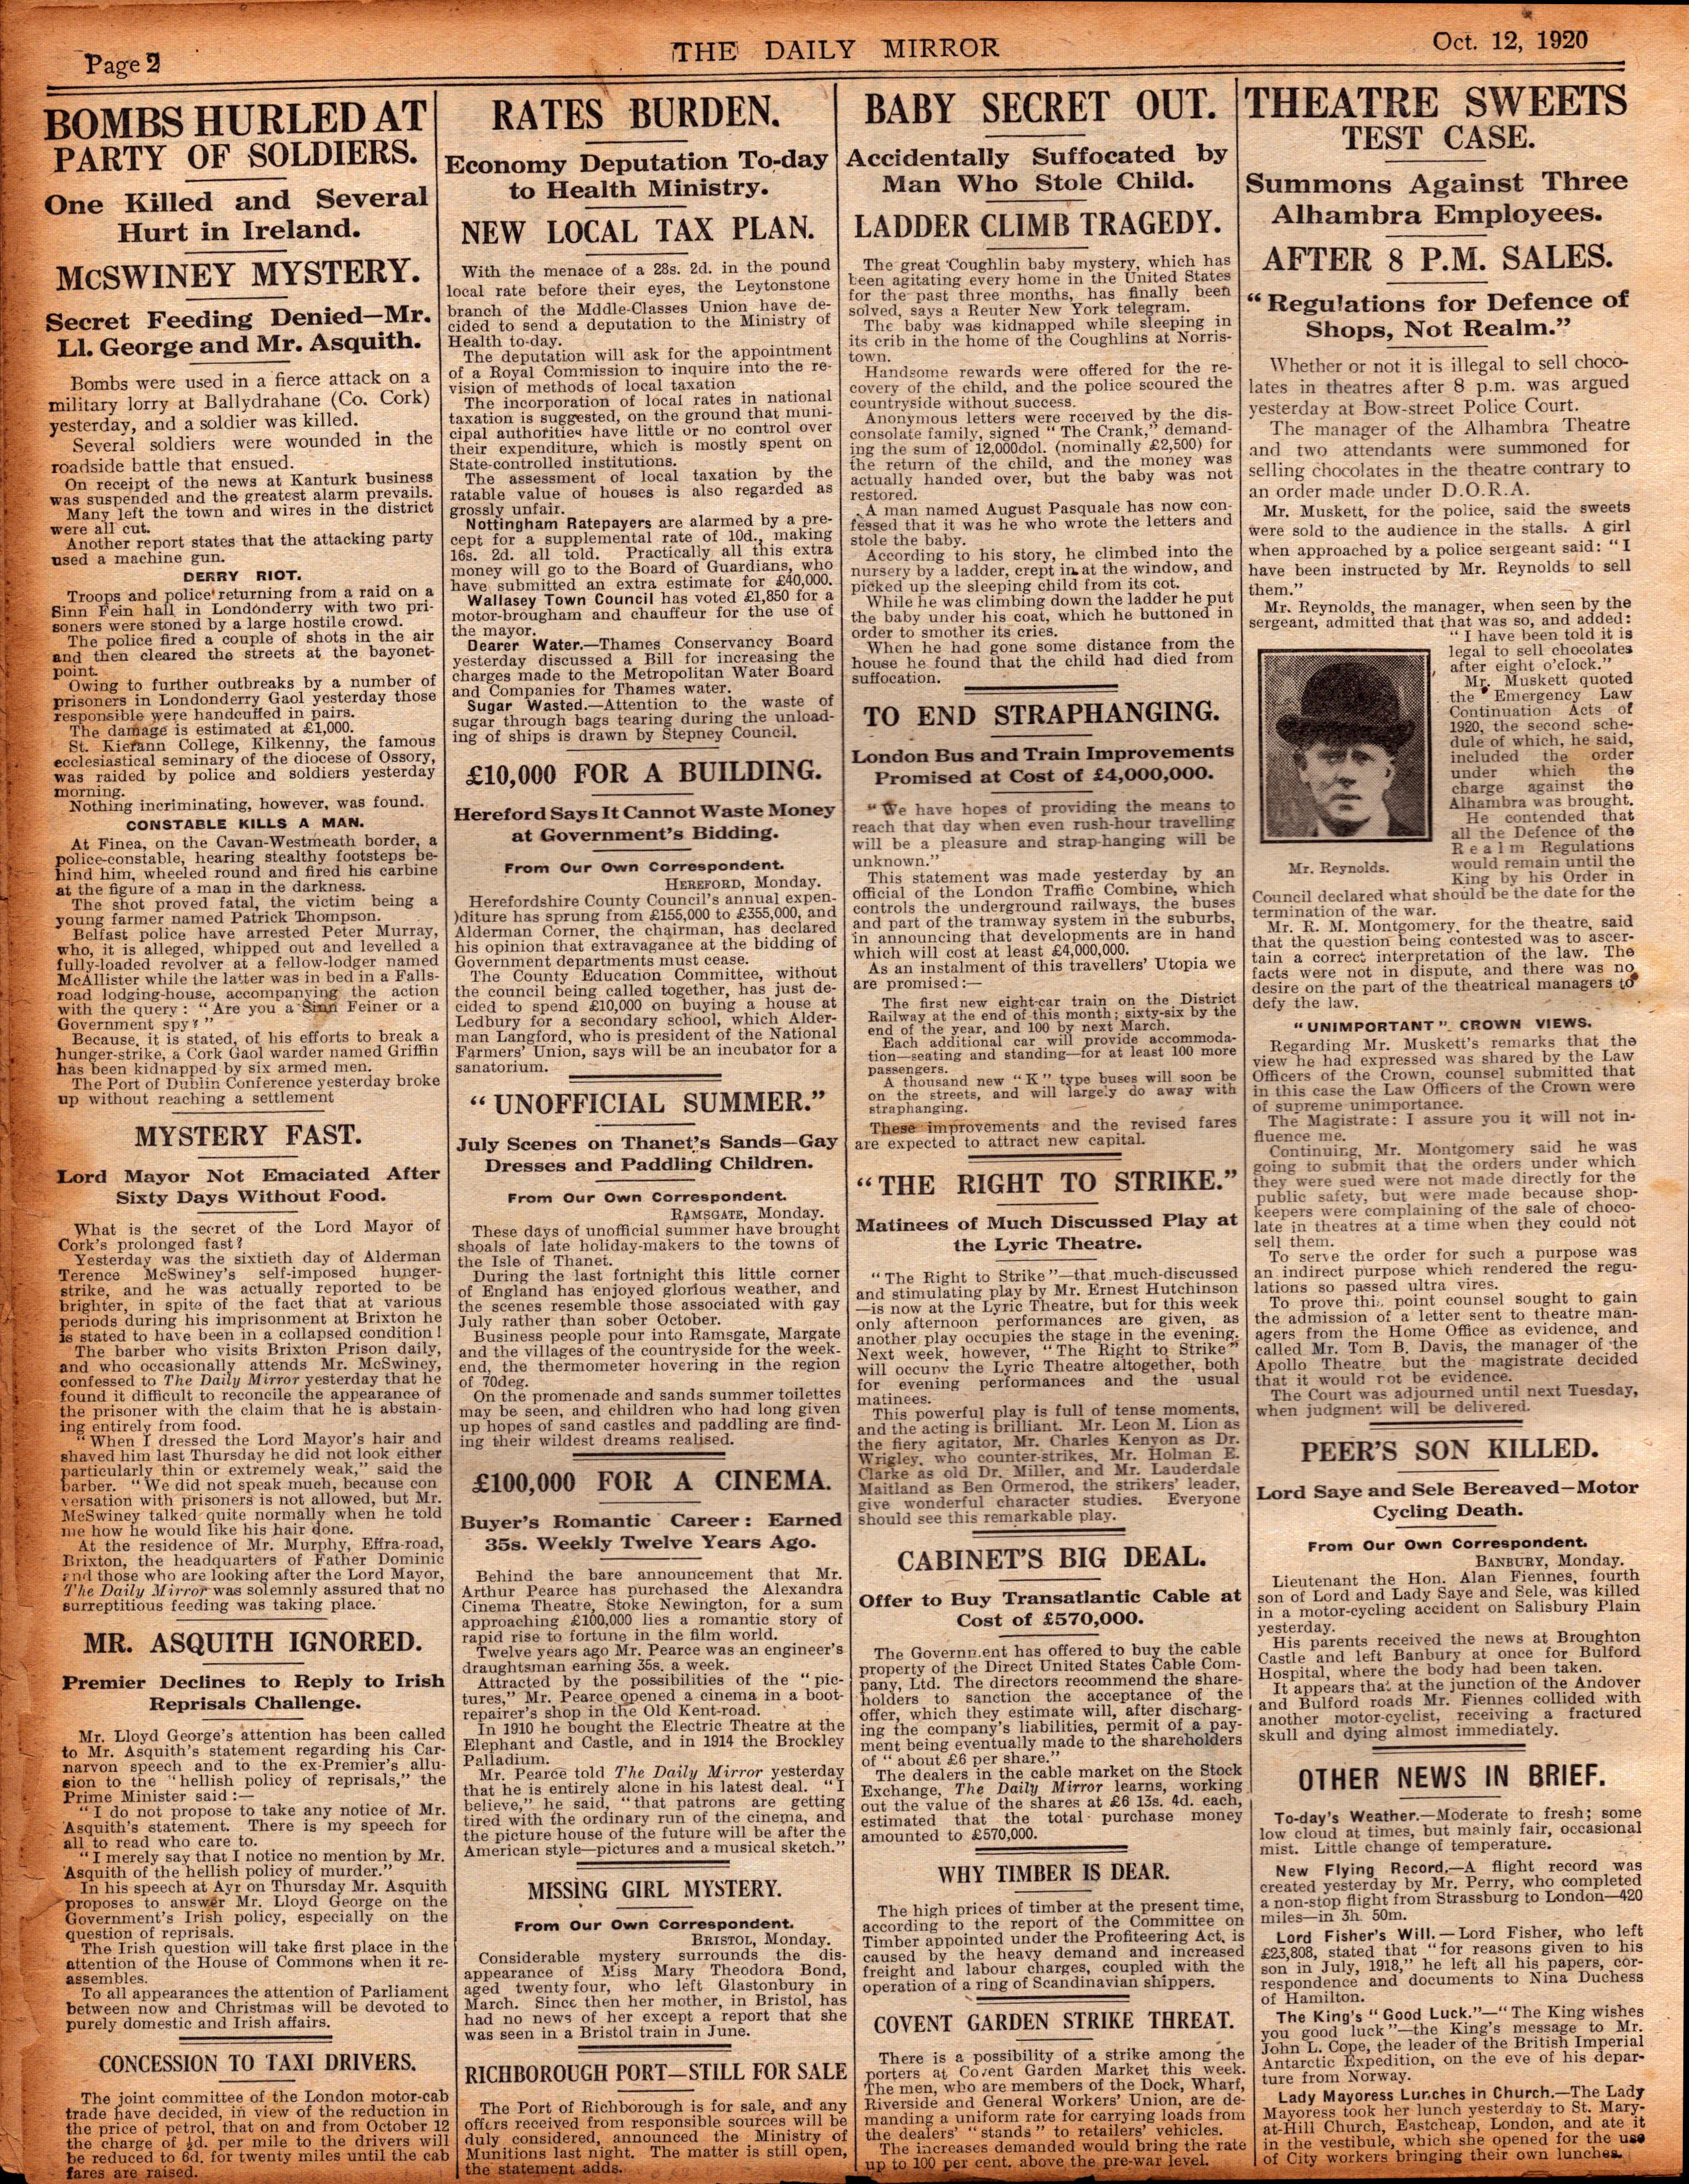 Lord Mayor Cork Entering 60th Day Hunger Strike 1920 Newspaper.